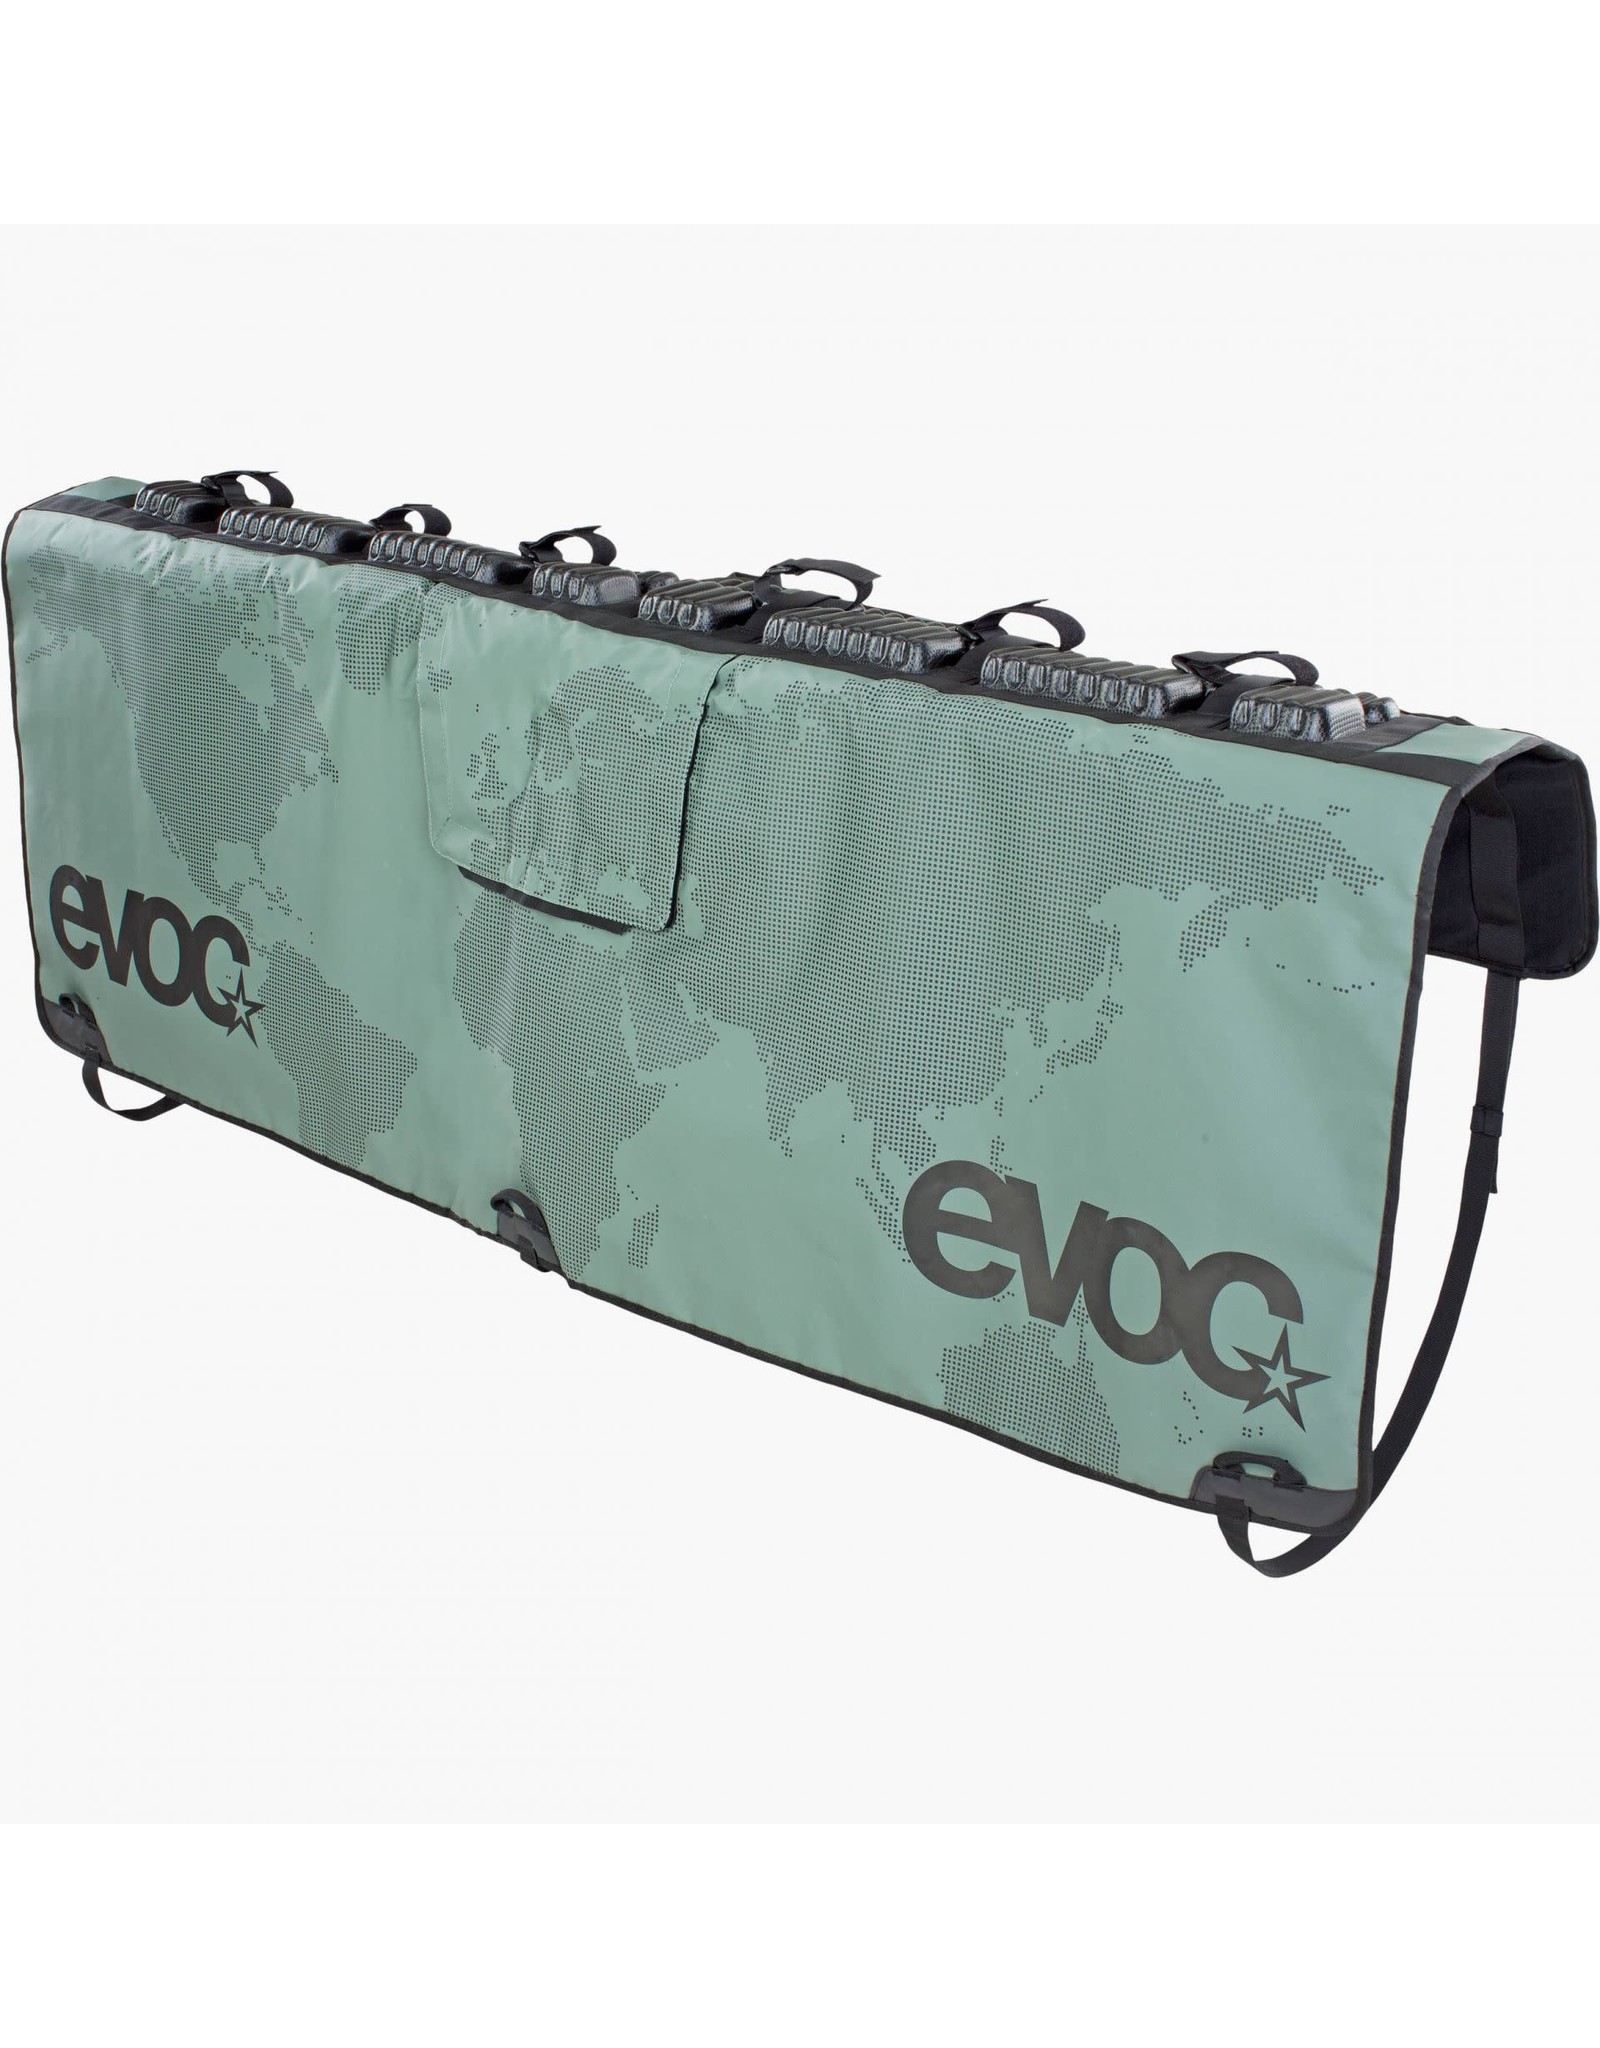 EVOC EVOC, Tailgate Pad, 160cm / 63'' wide, for full-sized trucks, Olive (XL)